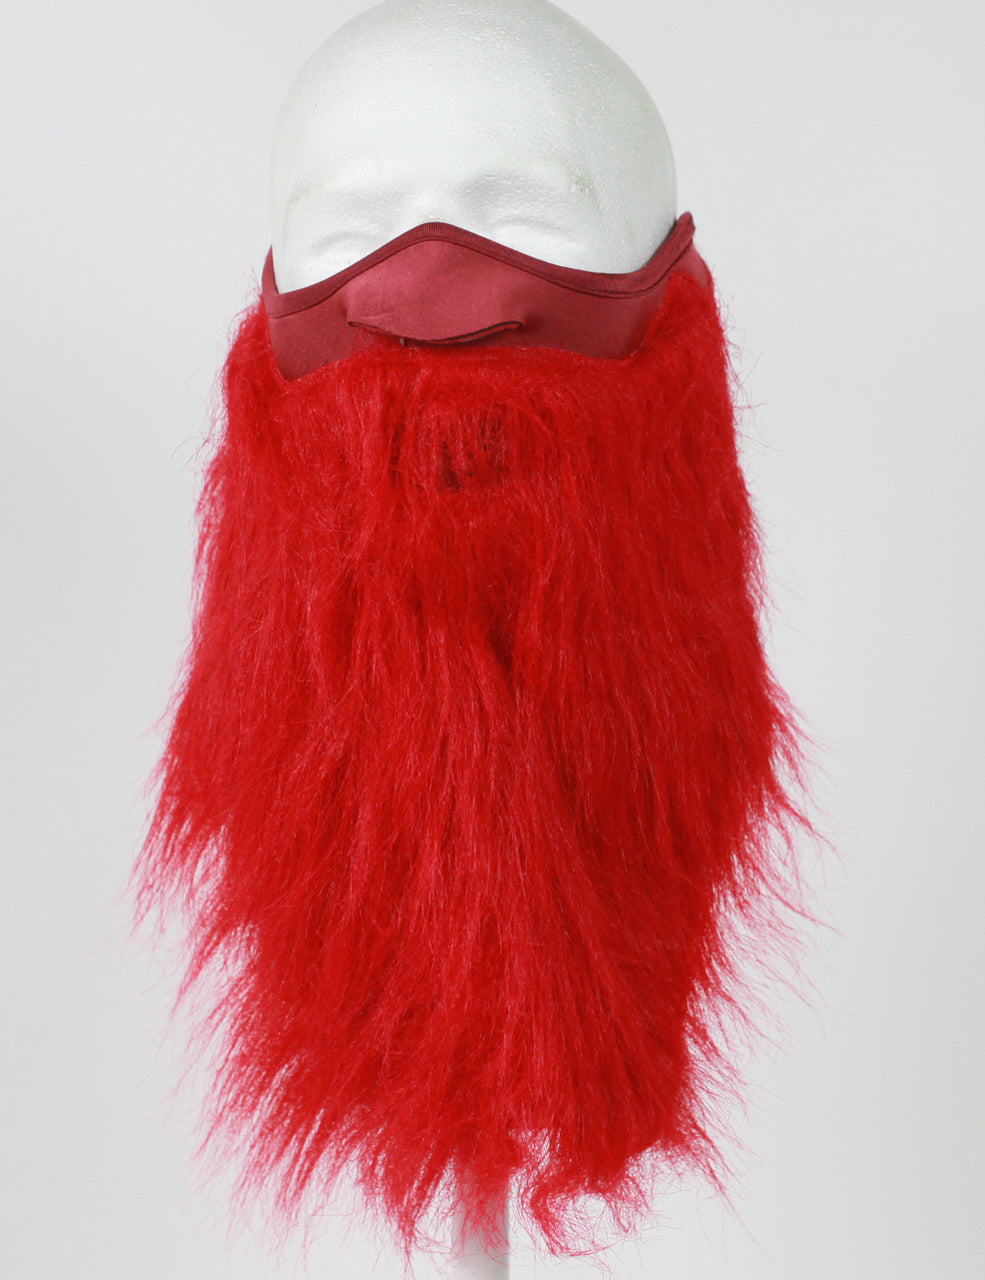 Beardski Zeke Red Bearded Ski Mask